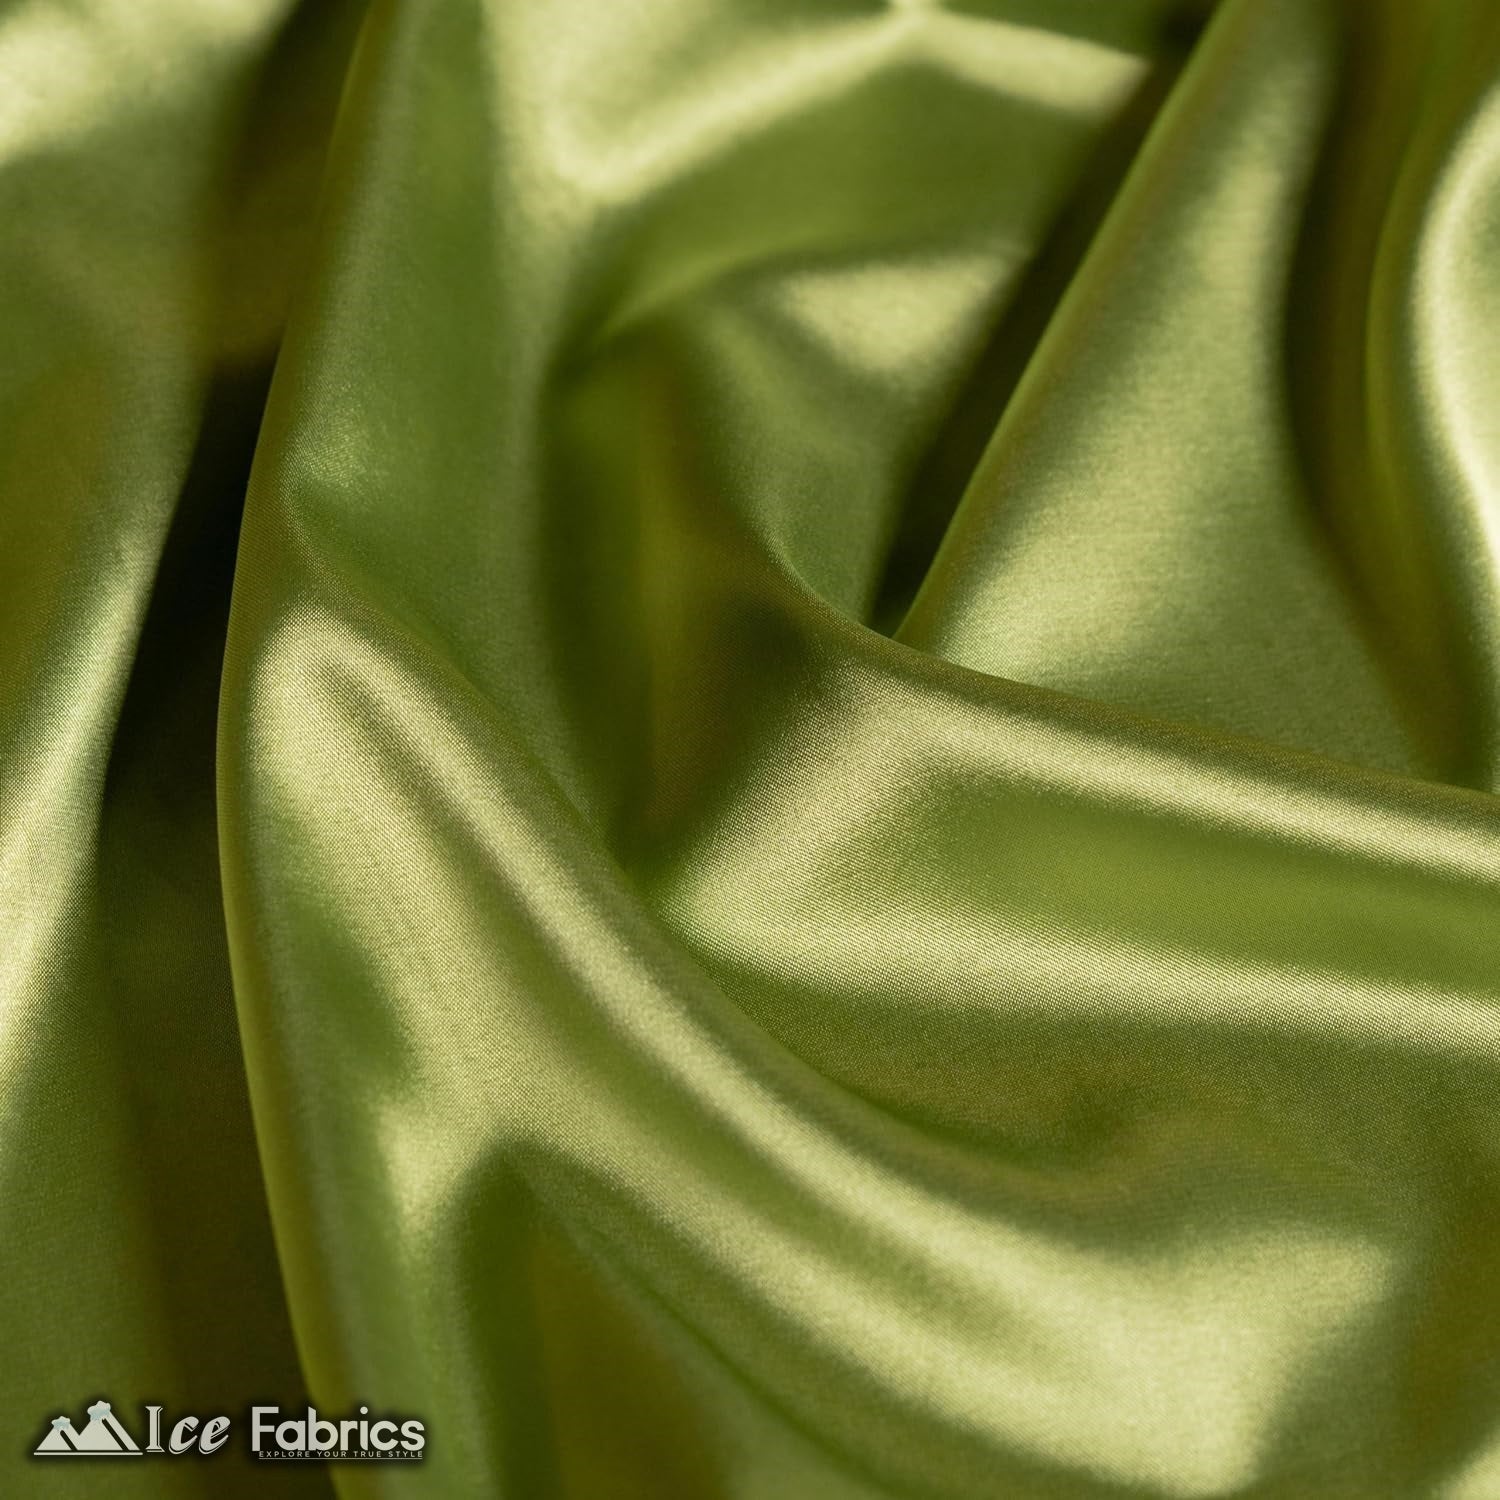 New Shiny Sage Green Charmeuse Stretch Satin FabricICE FABRICSICE FABRICSBy The Yard (60" Wide)New Shiny Sage Green Charmeuse Stretch Satin Fabric